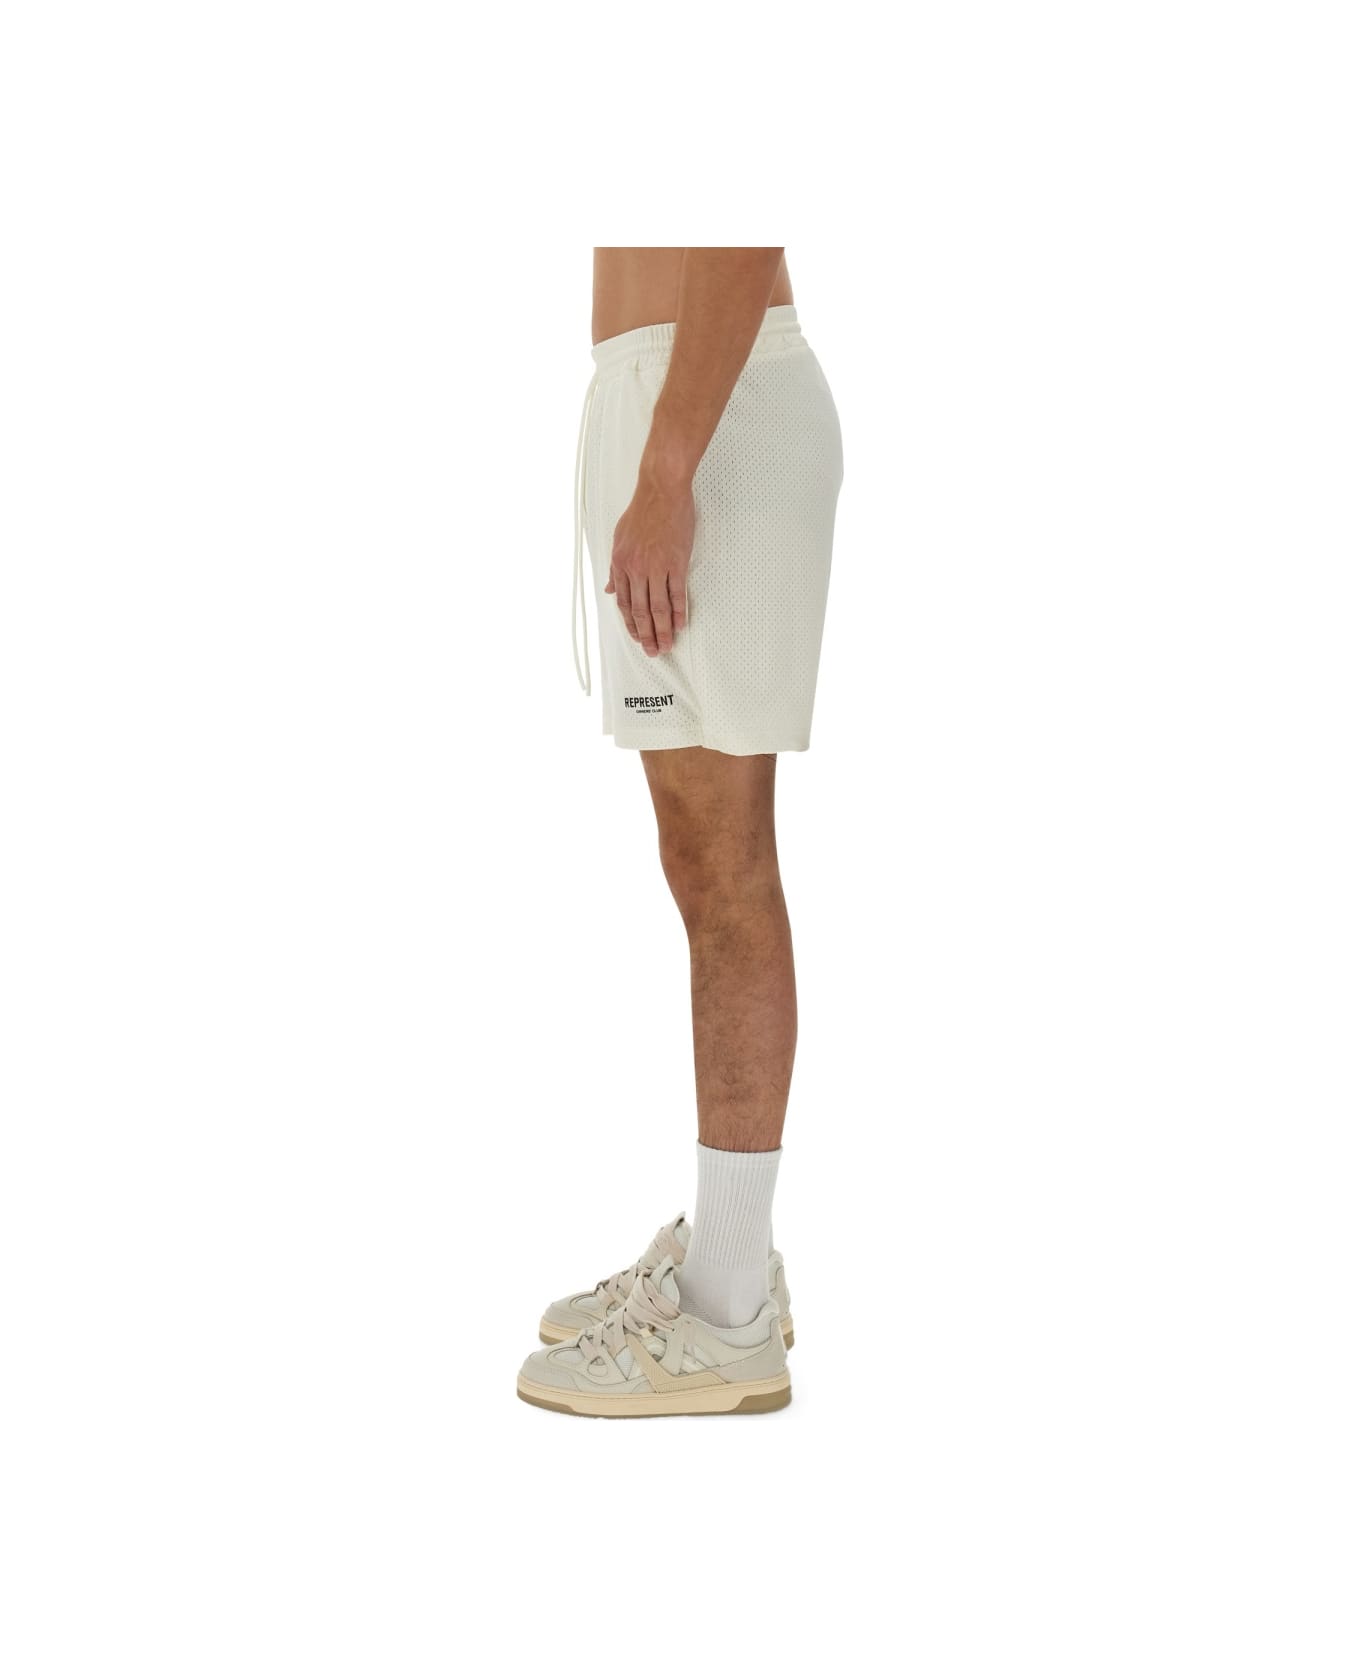 REPRESENT Mesh Bermuda Shorts - WHITE